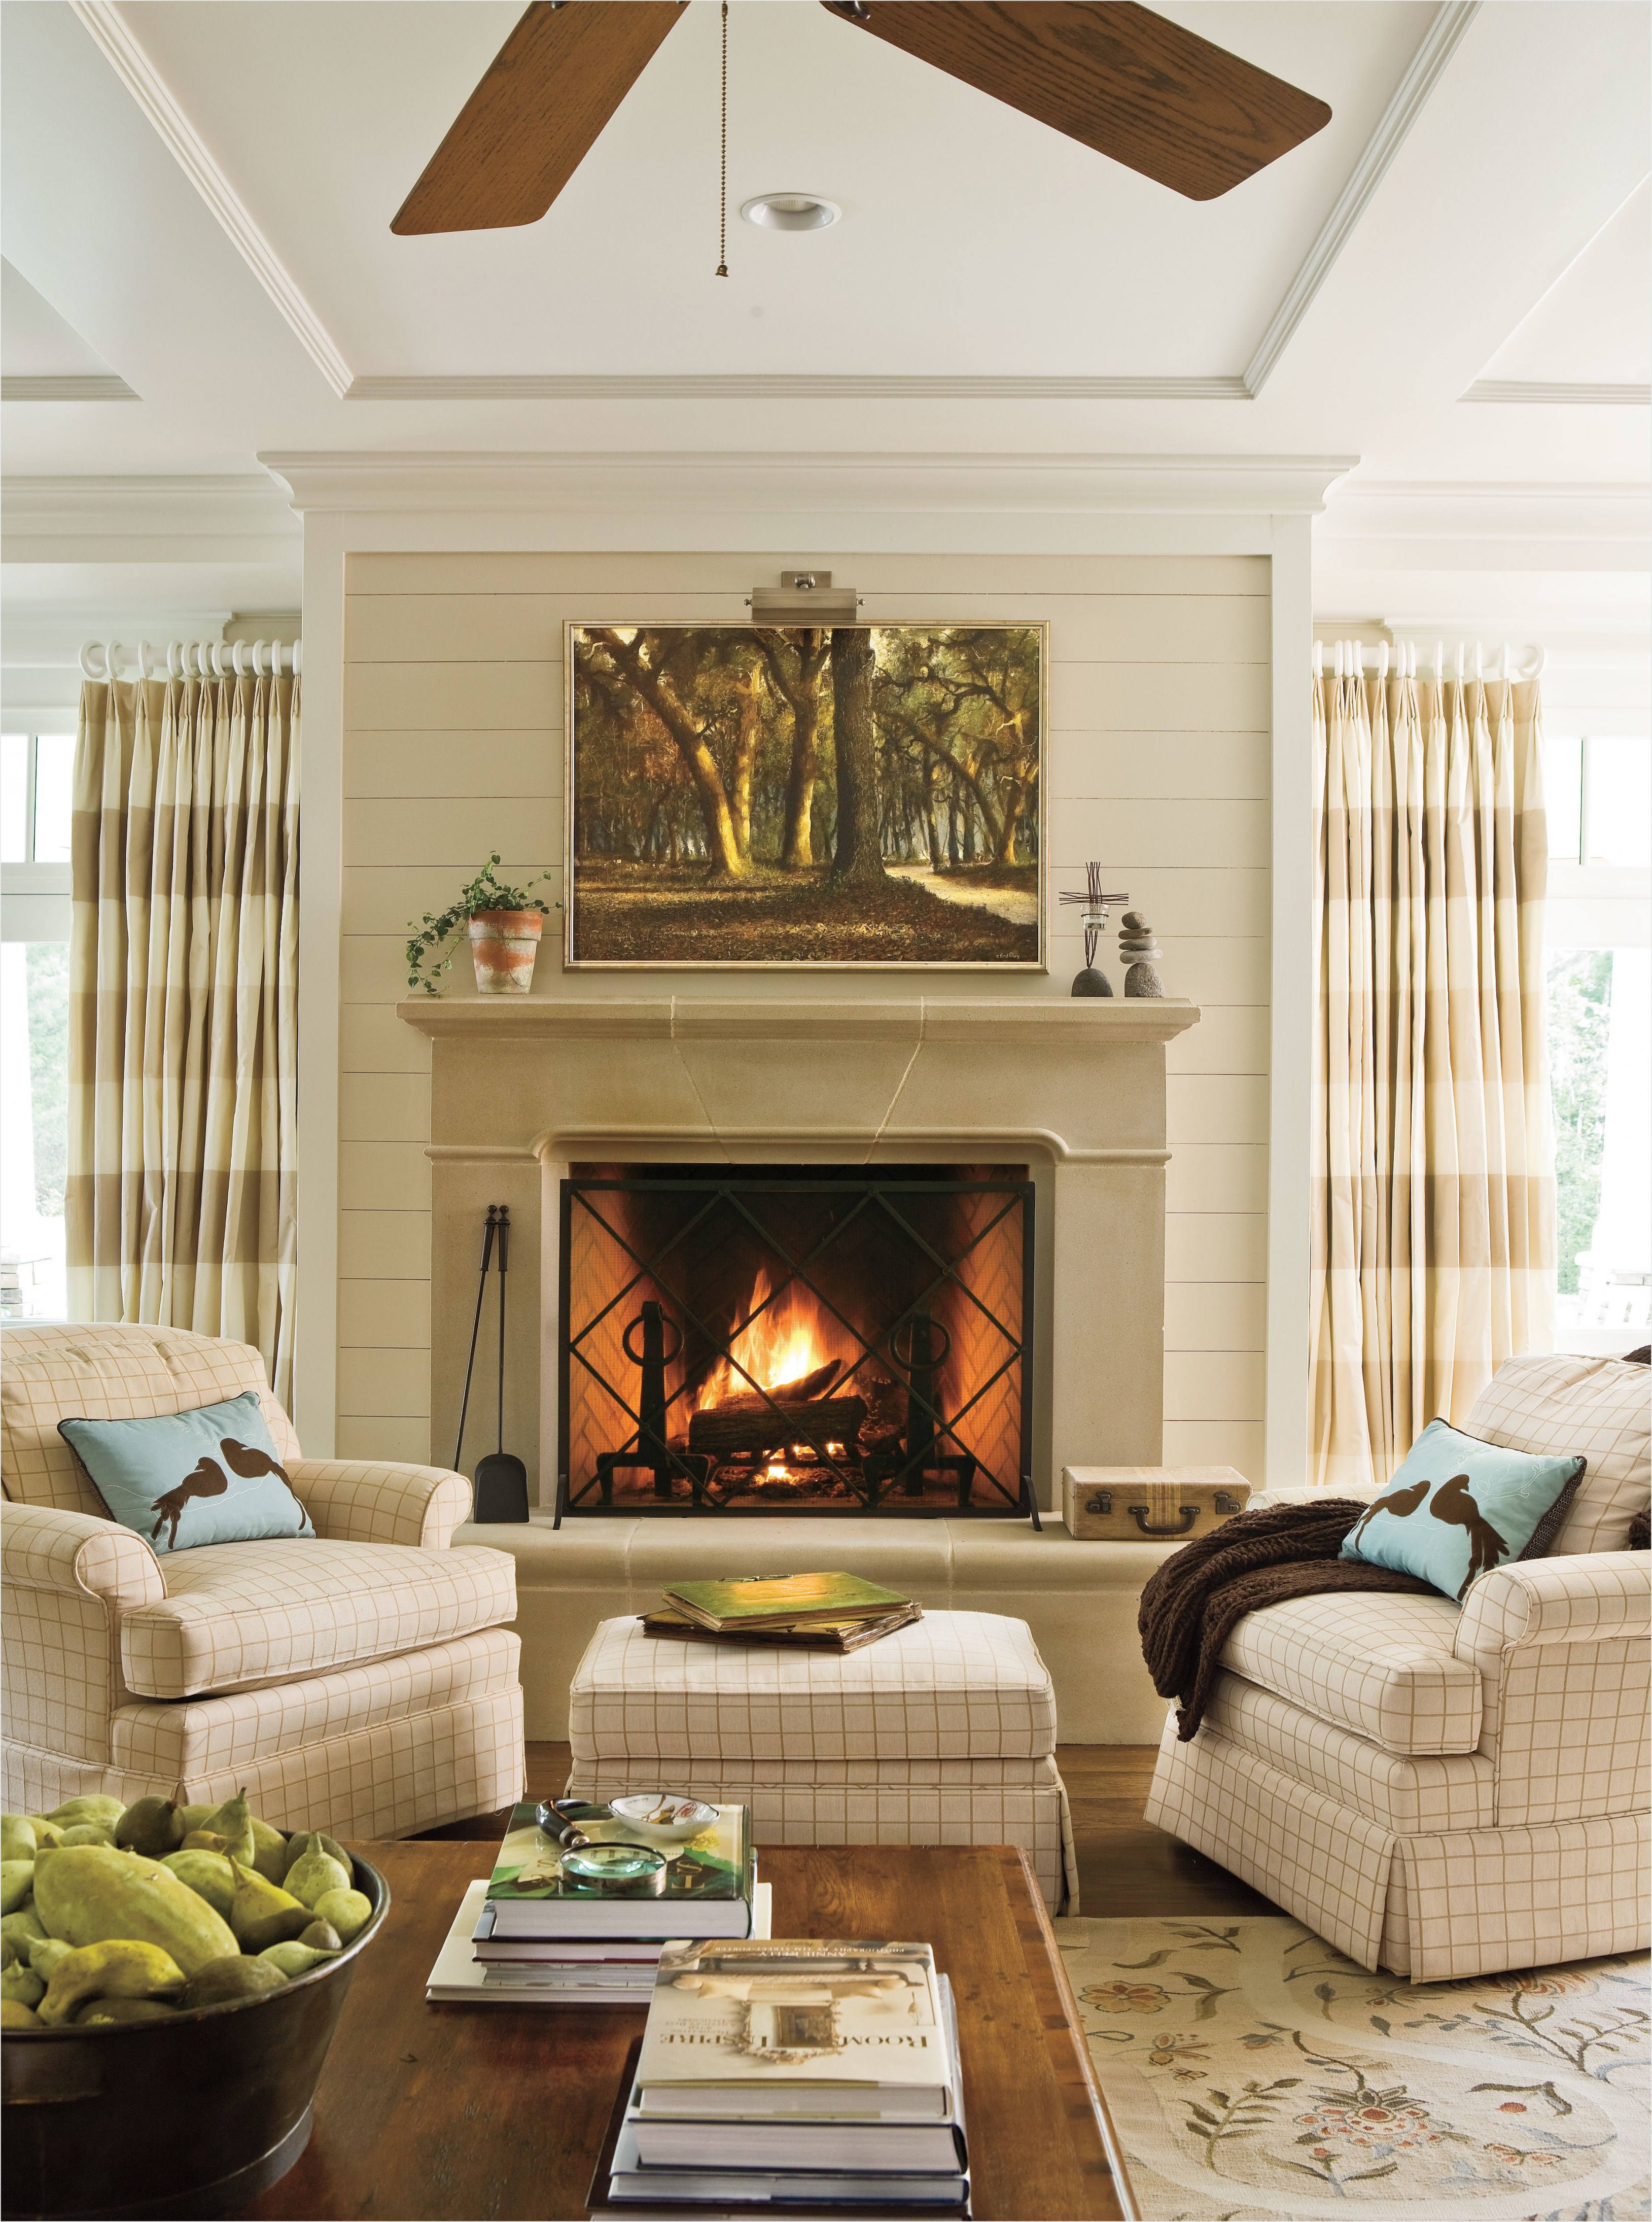 Fireplace Designer Inspirational Table Design for Home Modern Fireplace Designs Inspirational